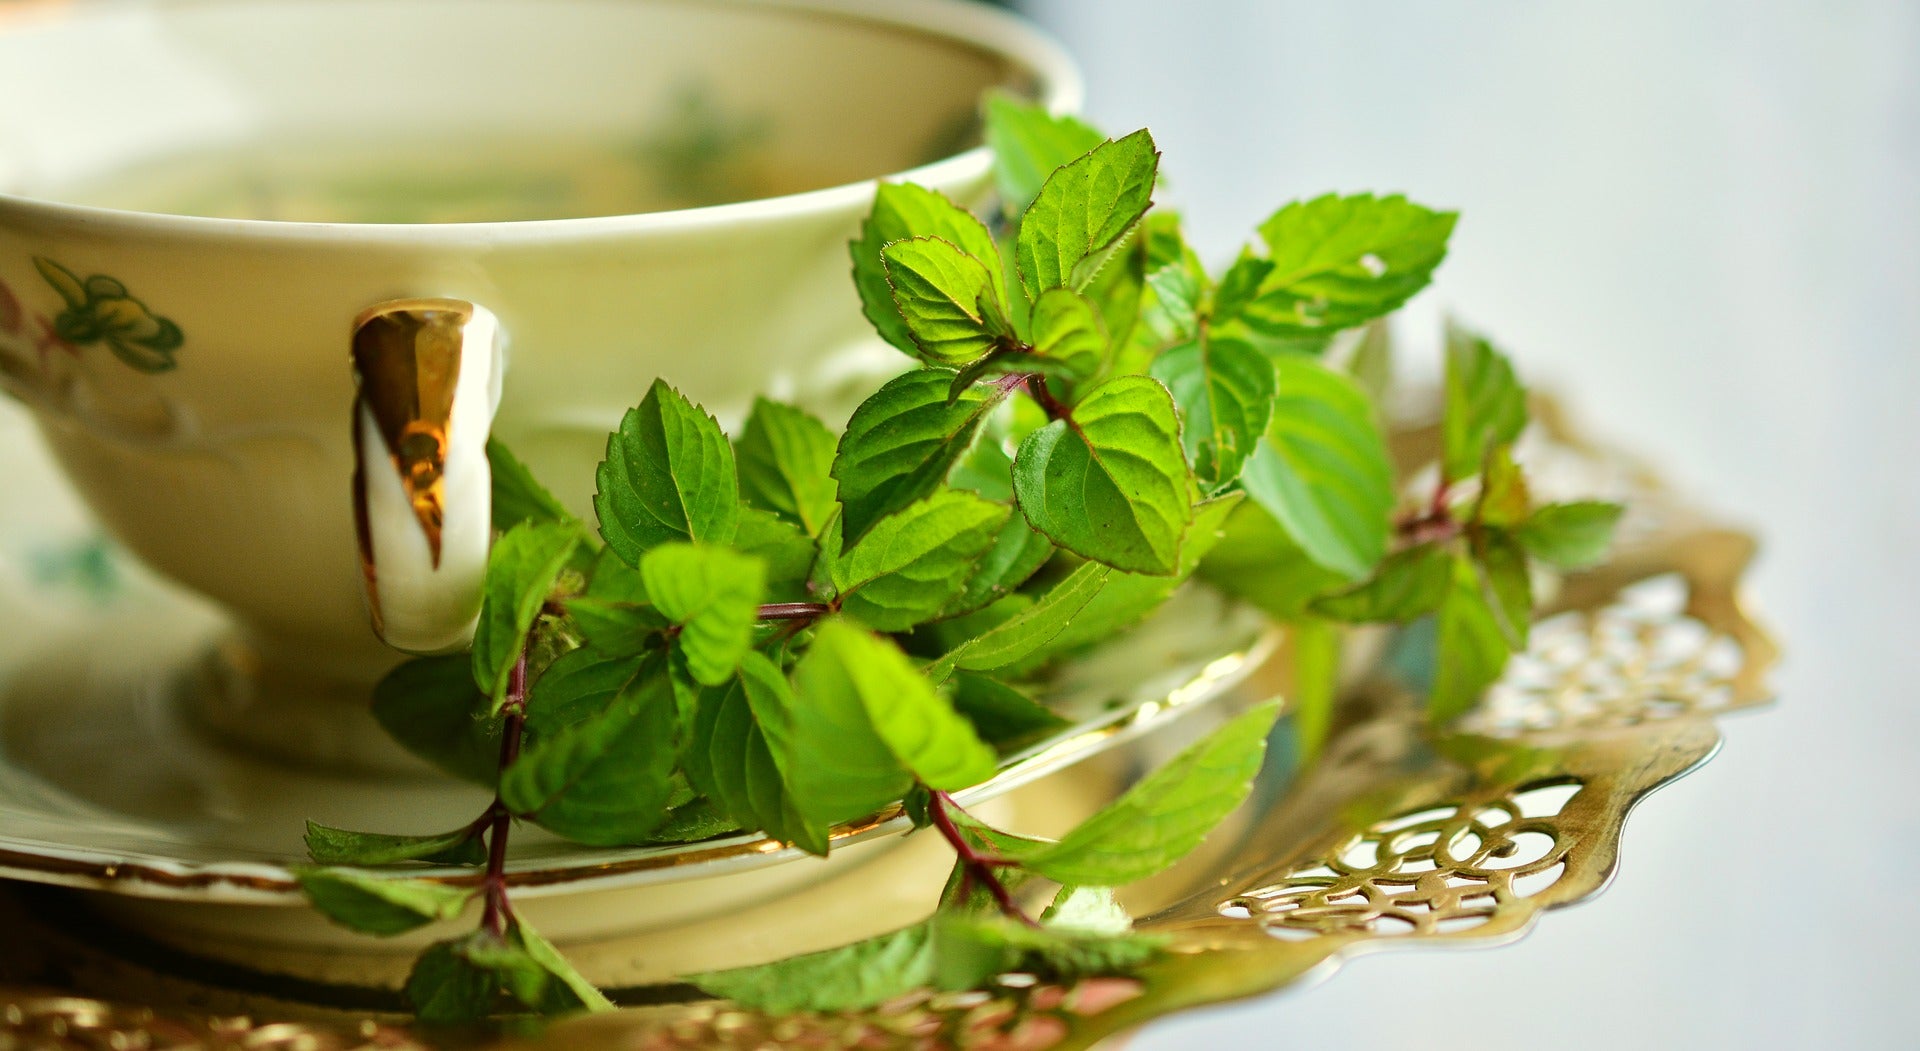 Spearmint tea benefits